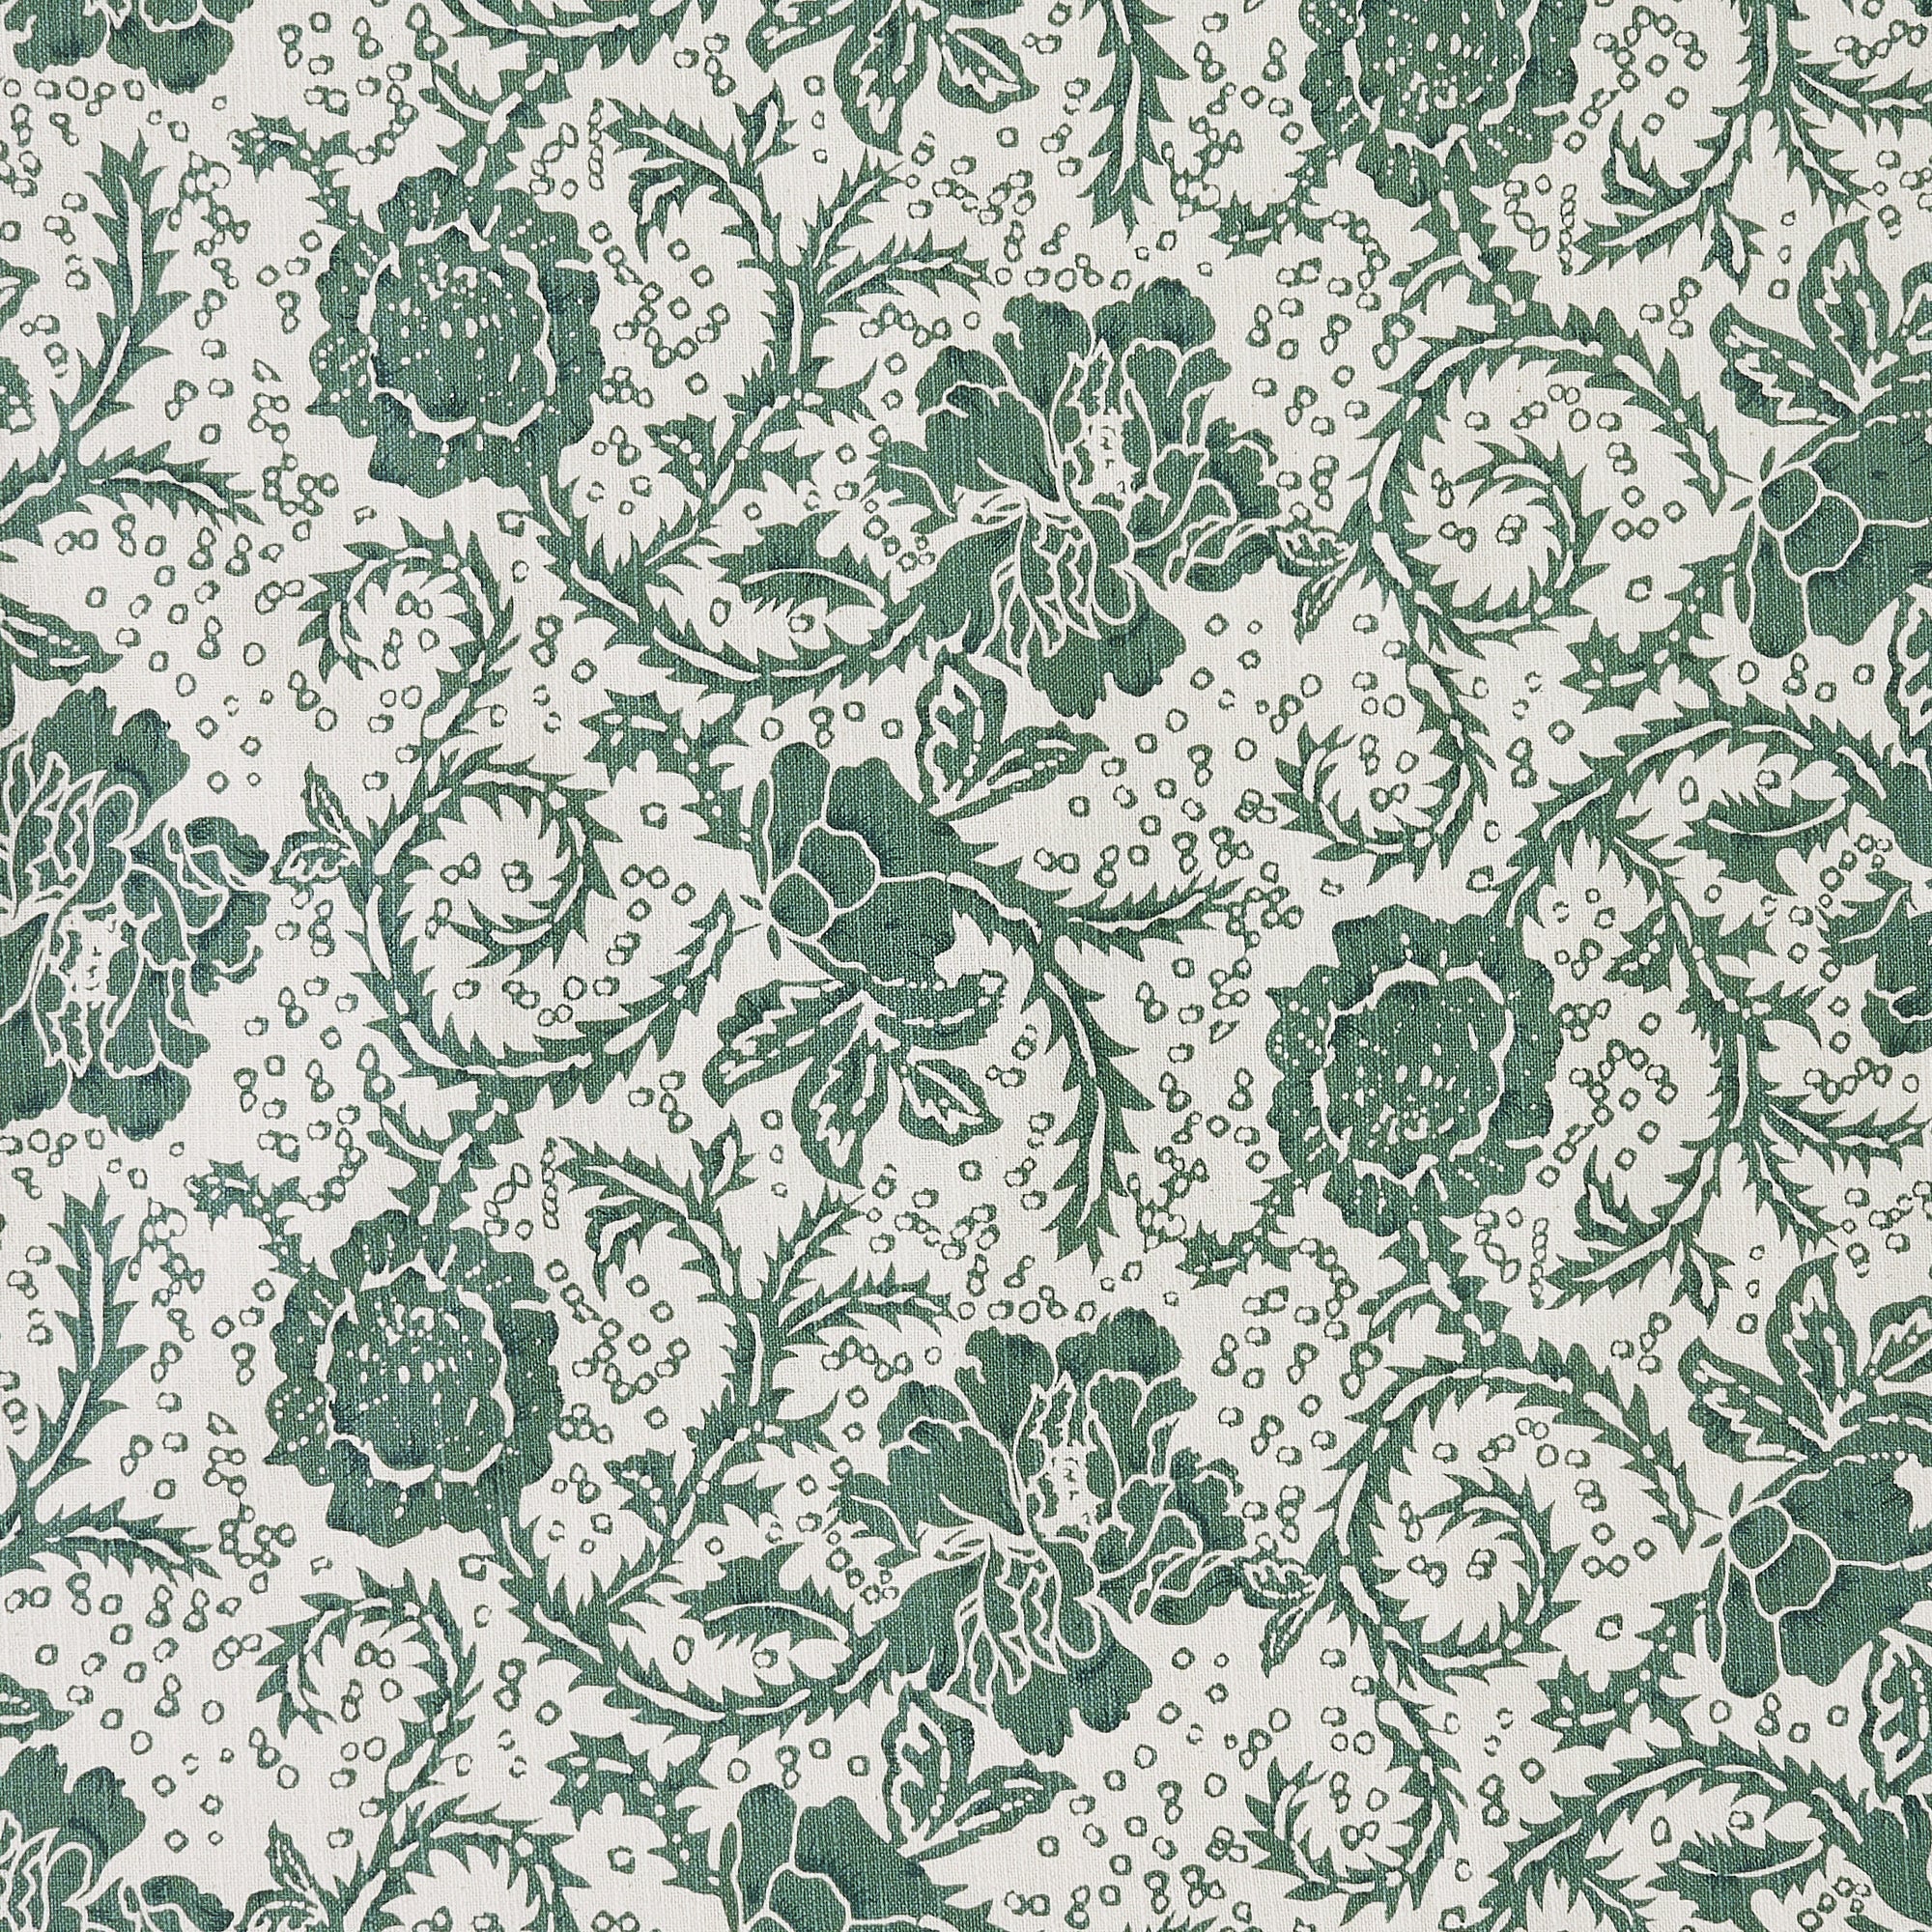 Dorset Green Floral Ruffled King Pillow Case Set of 2 21x36+4 VHC Brands